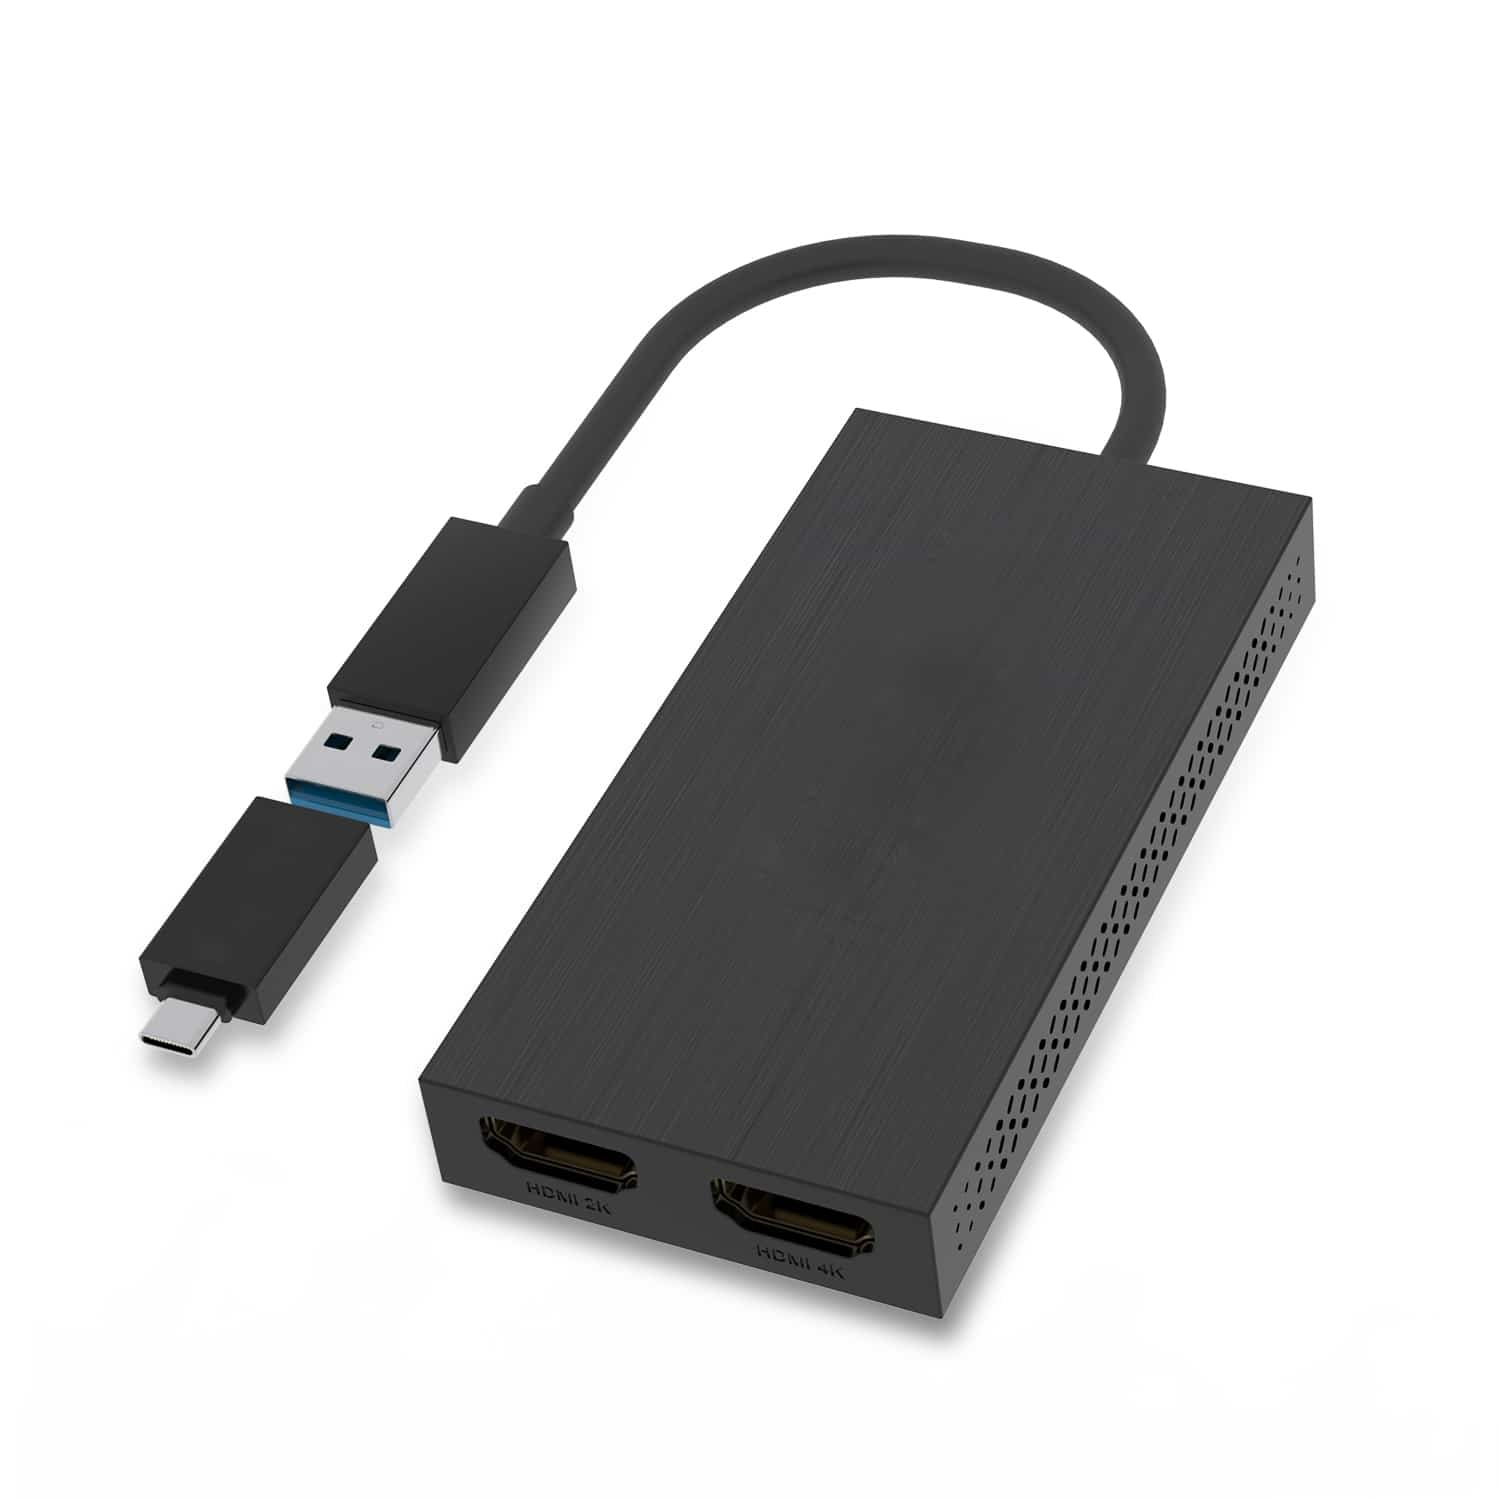 CONVERTIDOR USB 3.0 A HDMI COMPATIBLE CON 2.0 – Tienda MYFIMPORT